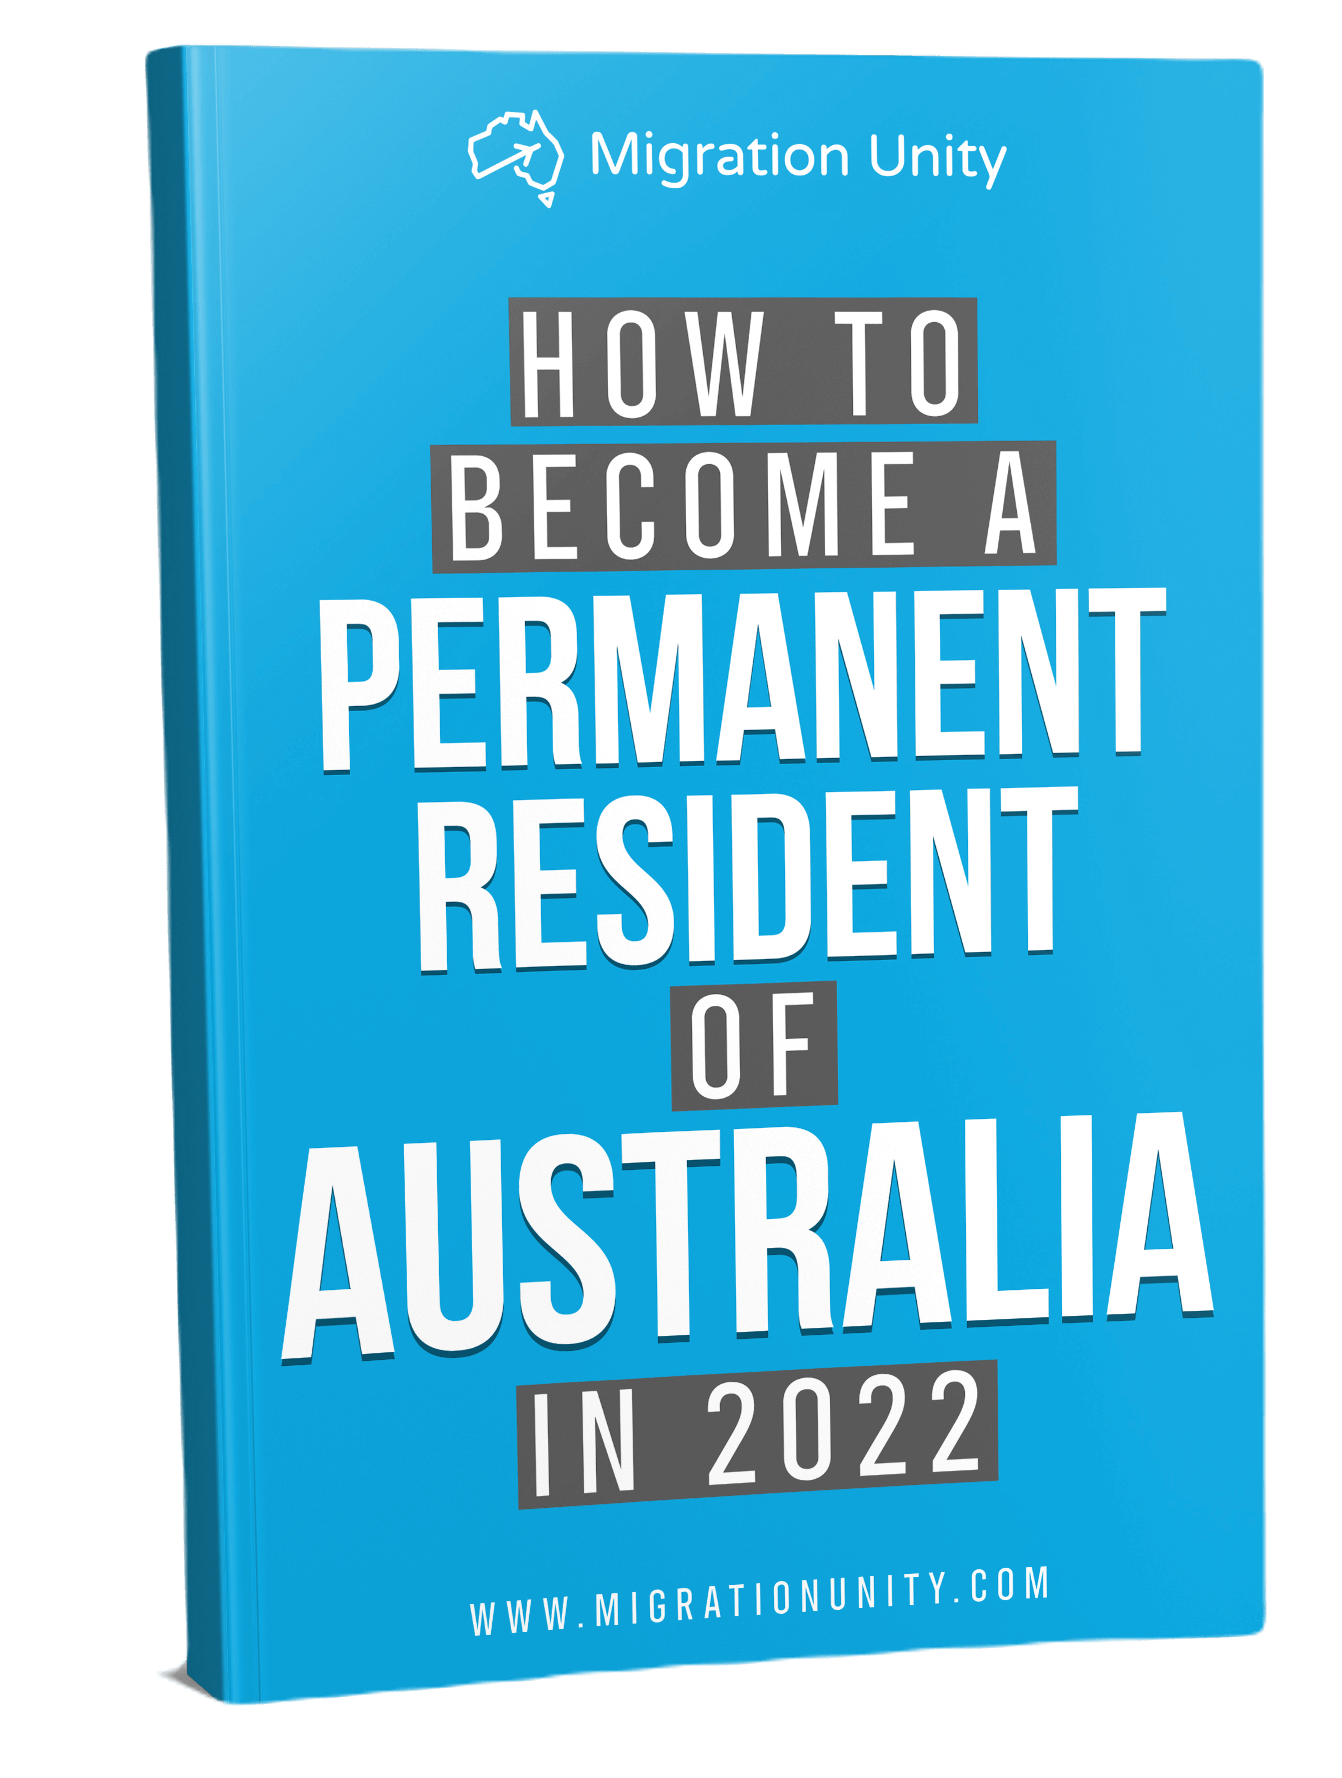 Permanent redsidentcy of Australia